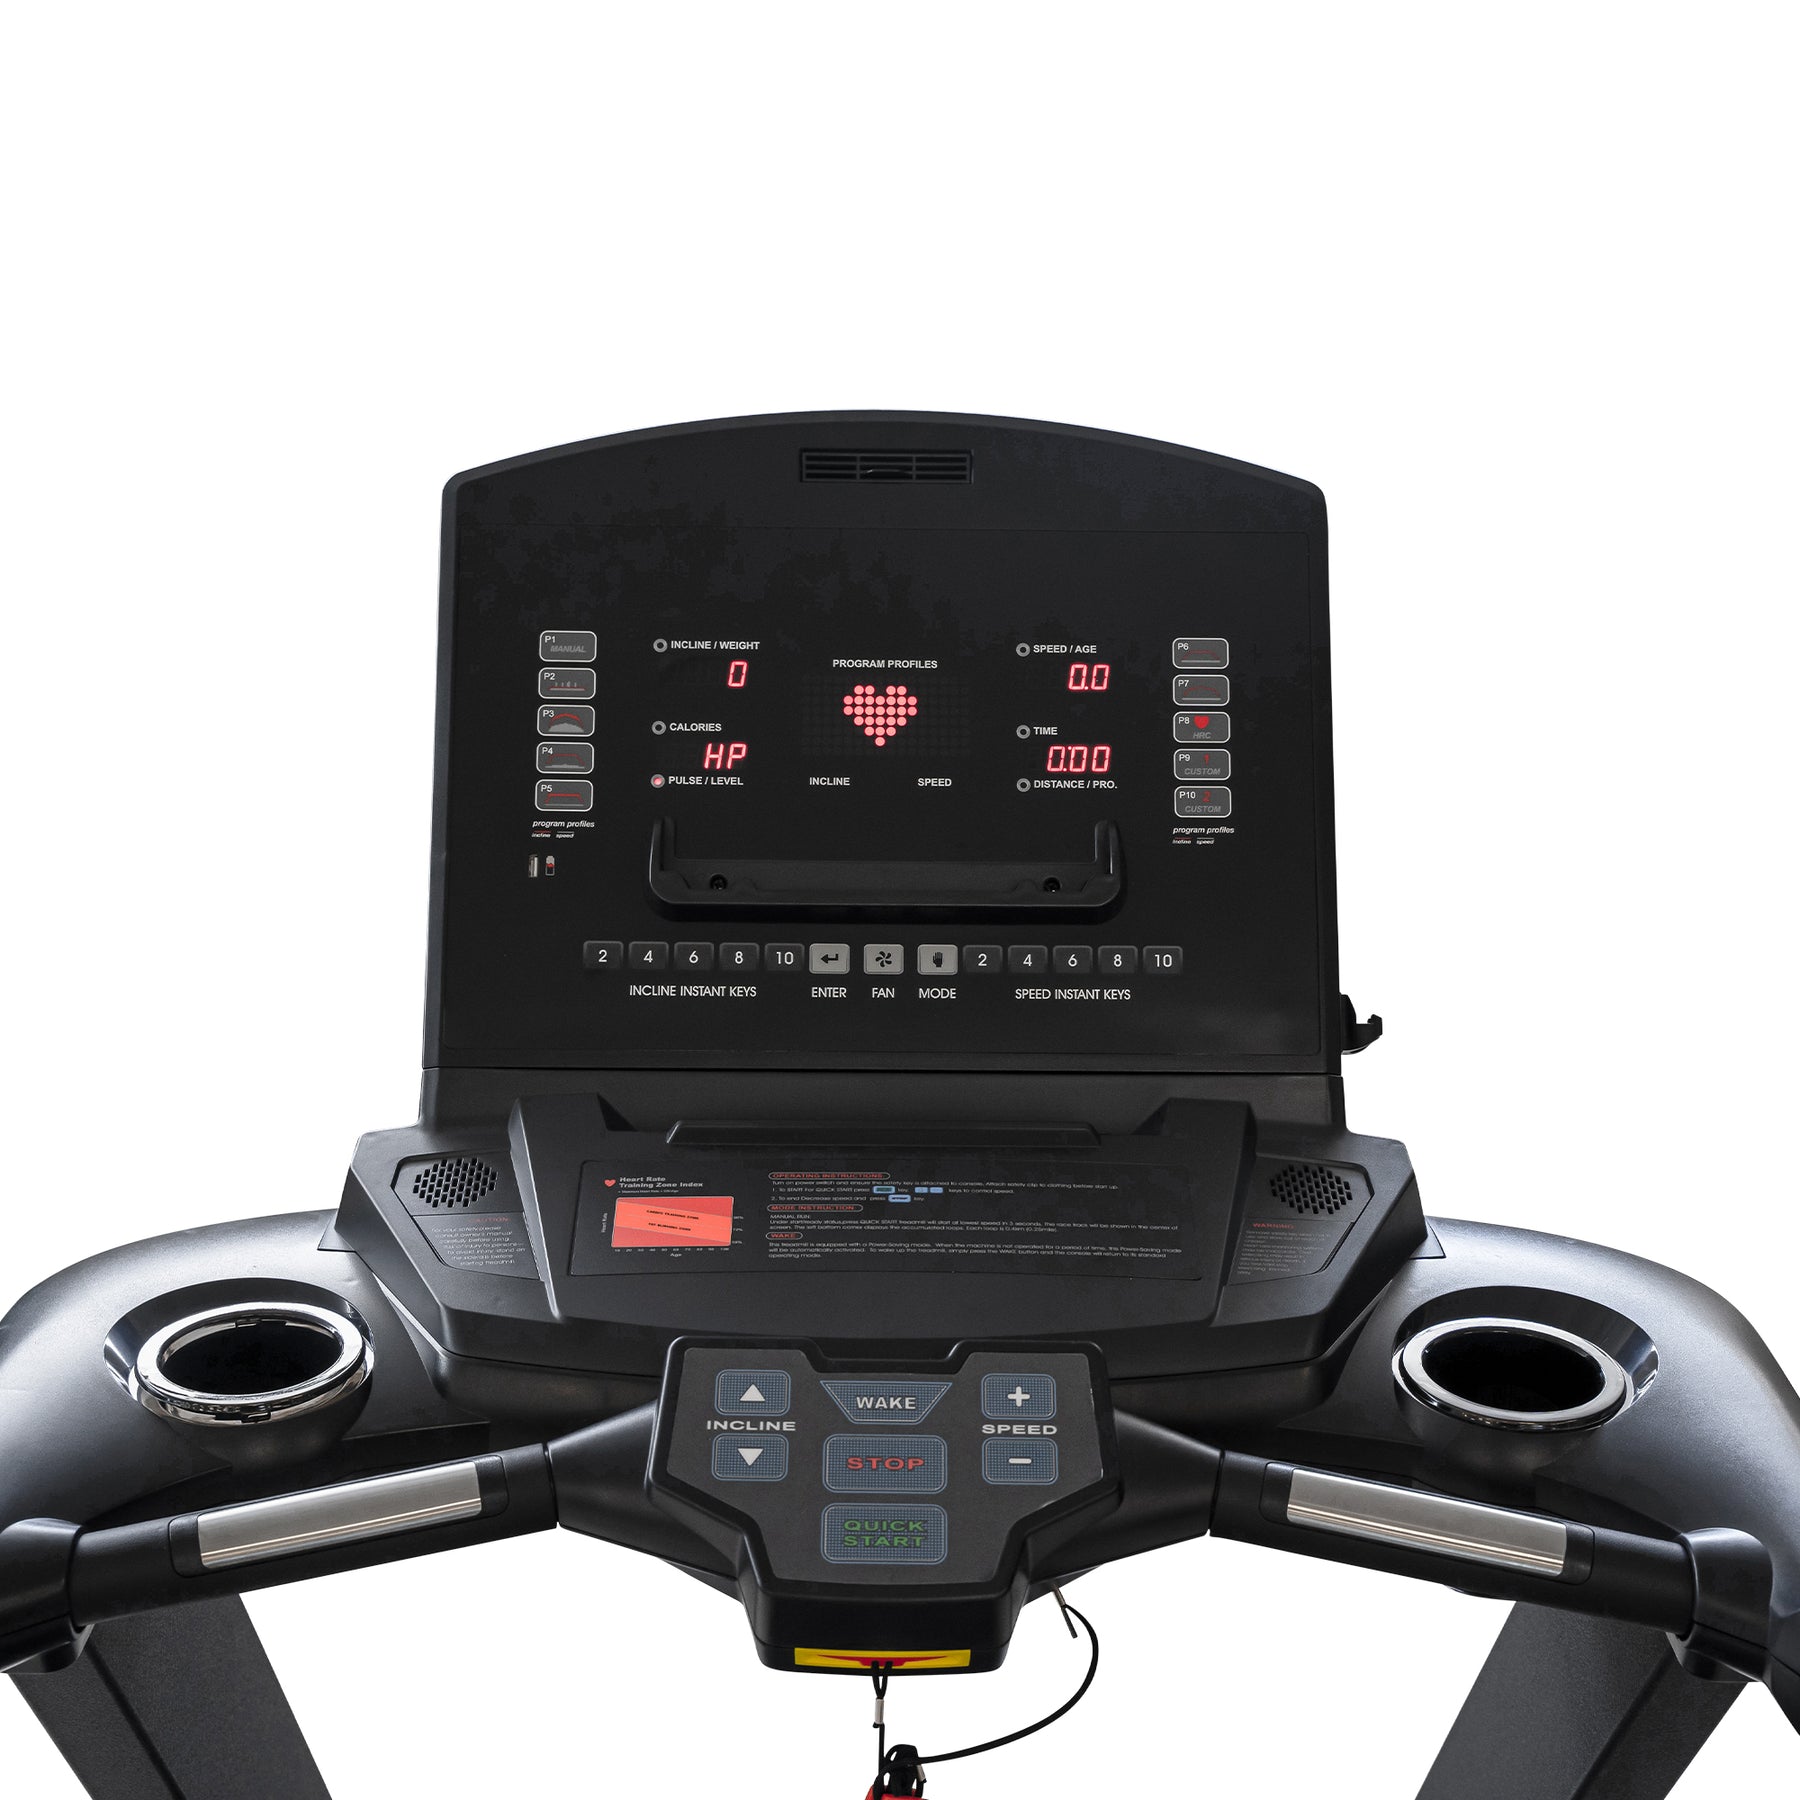 Reeplex T200 Commercial Treadmill Motion Series